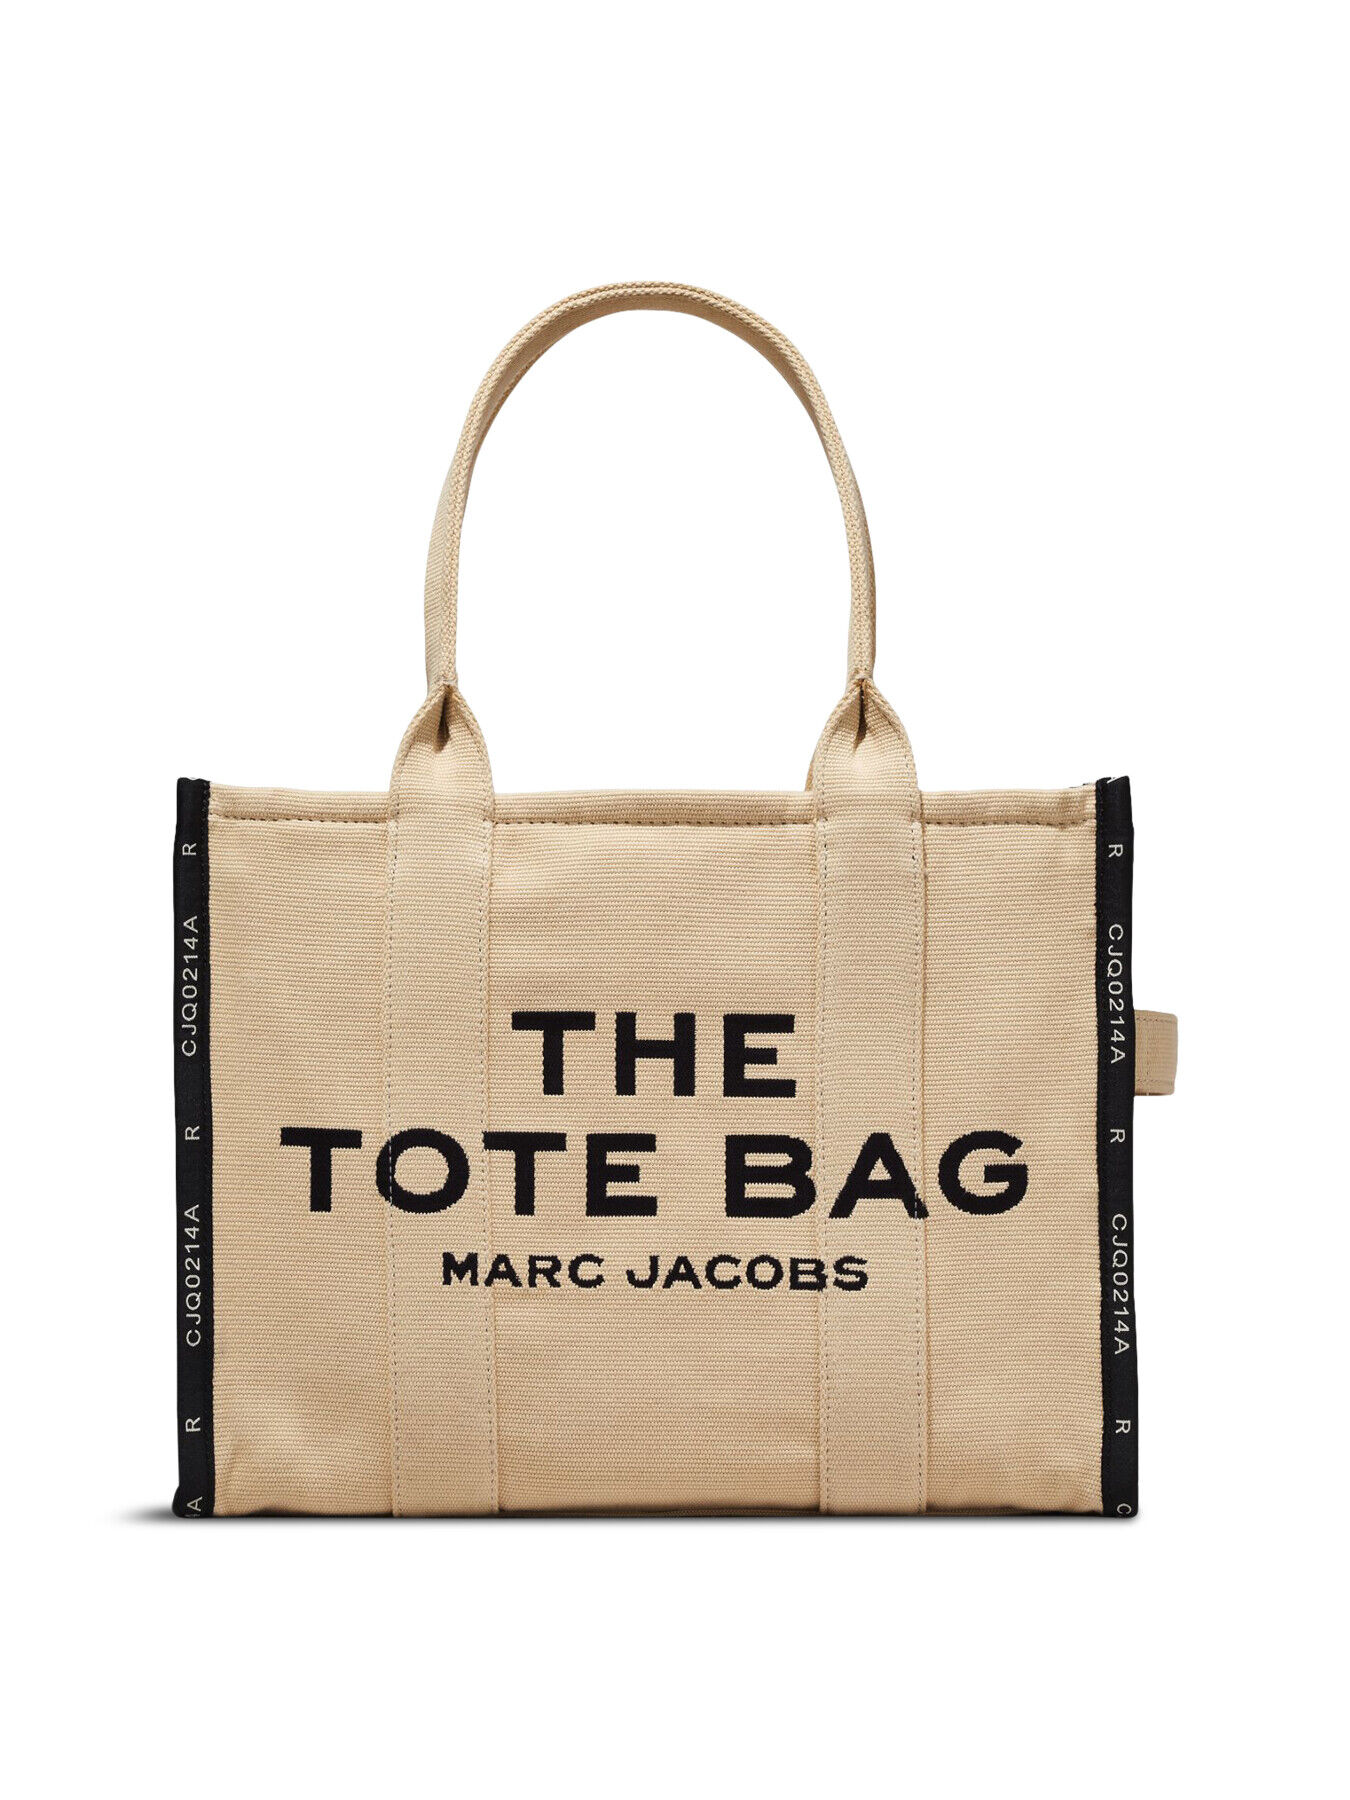 Shop Handbags | Crossbody Bags, Tote Bags, & Backpacks at ALDO Shoes